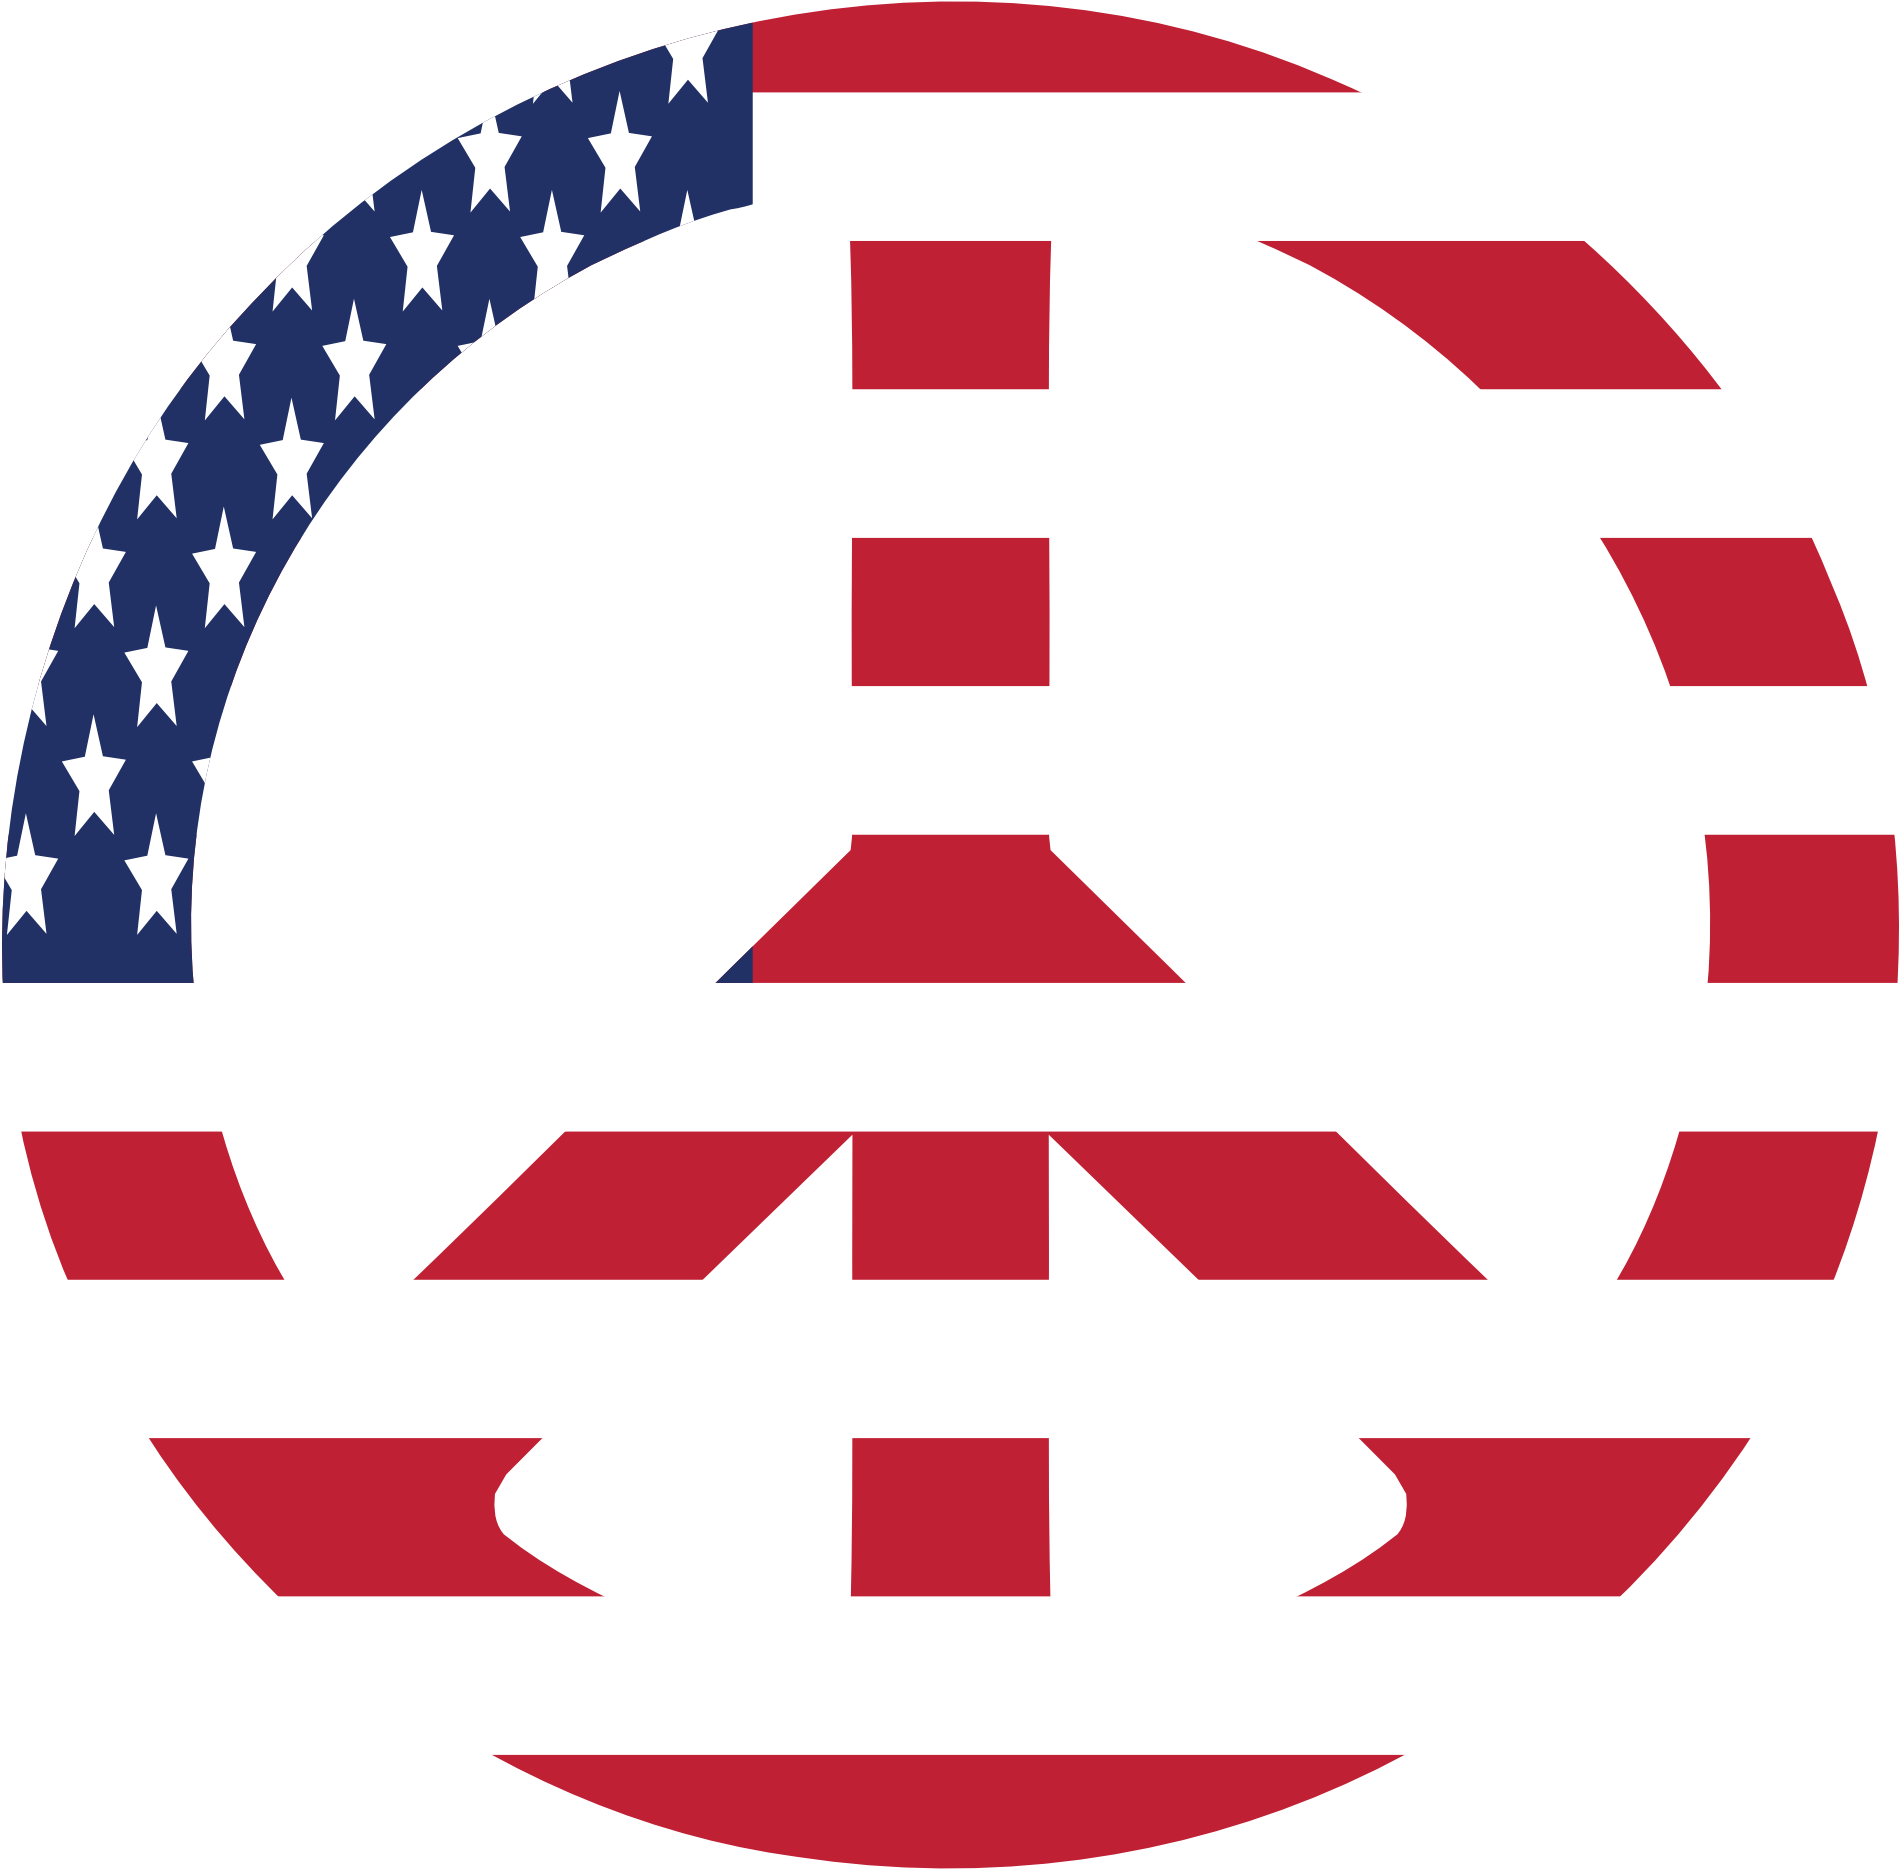 A Peace Sign With A Flag